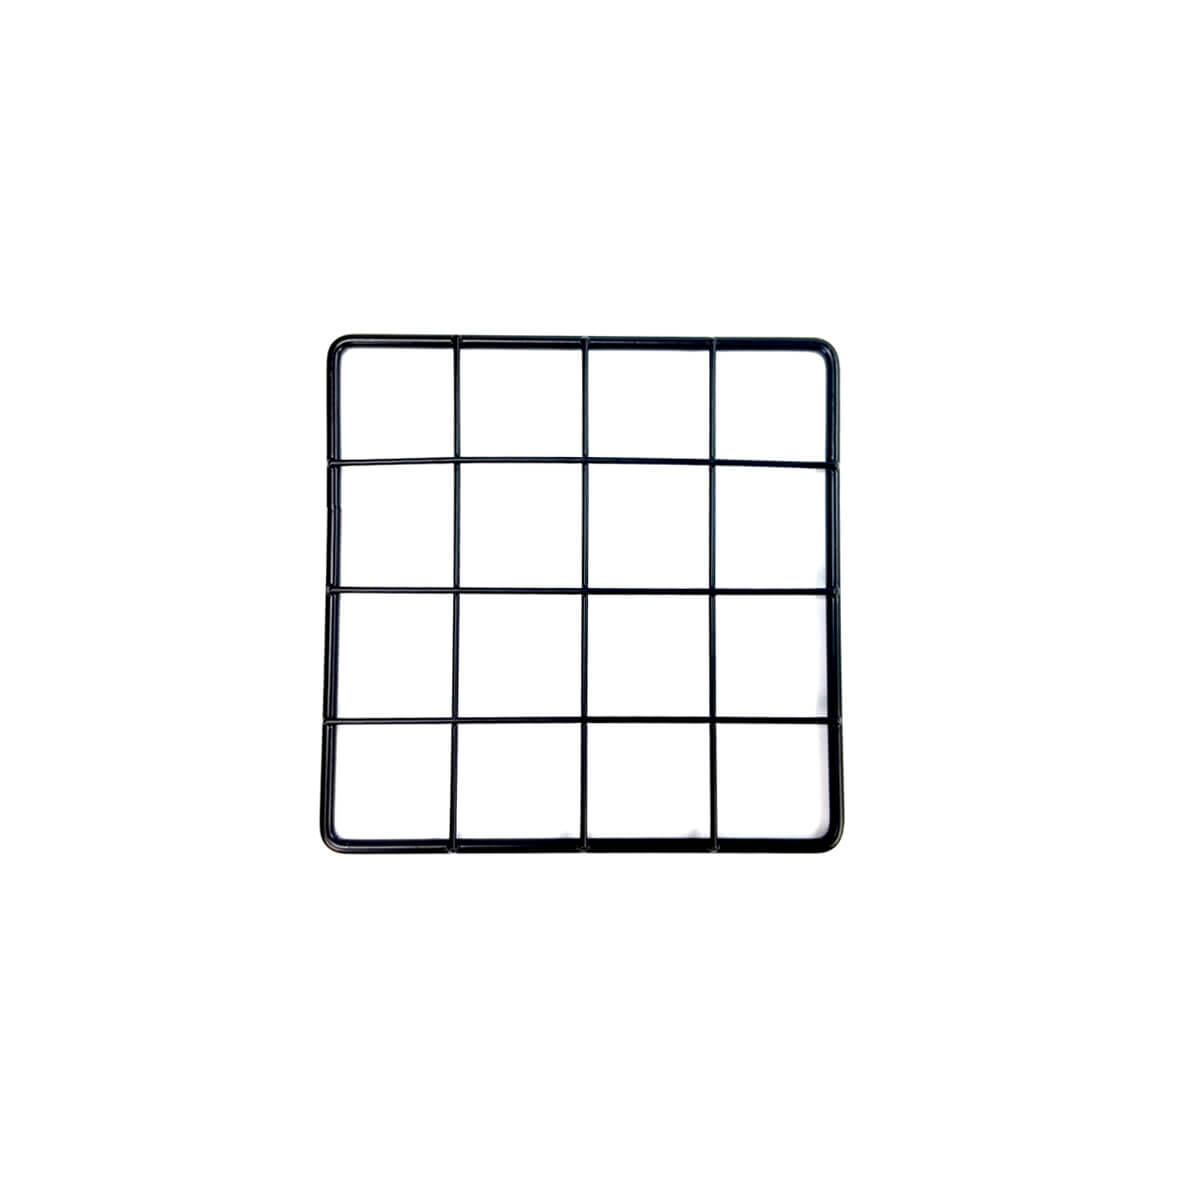 Mini Grid Black, 4 holes x 4 holes, 6 3/8" x 6 3/8"